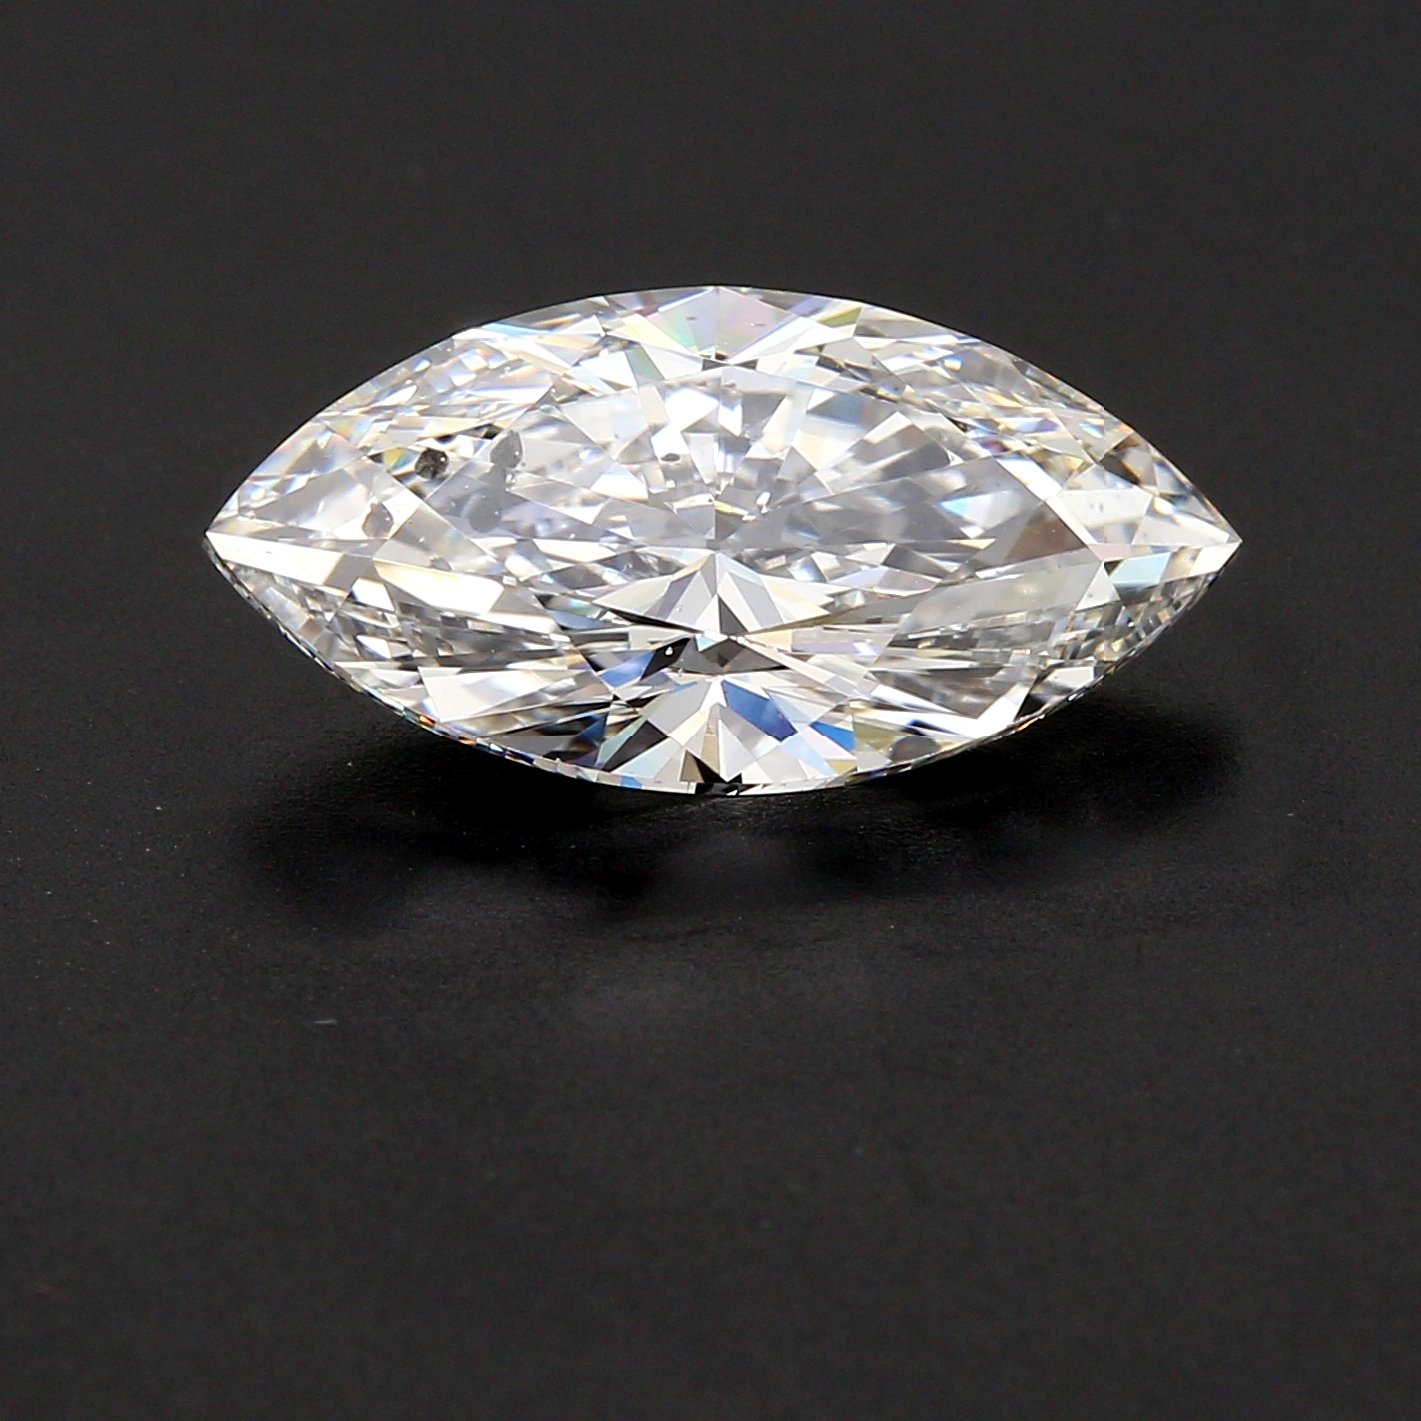 4.01ct Marquise Cut Diamond, SI2-E -GIA/INSC